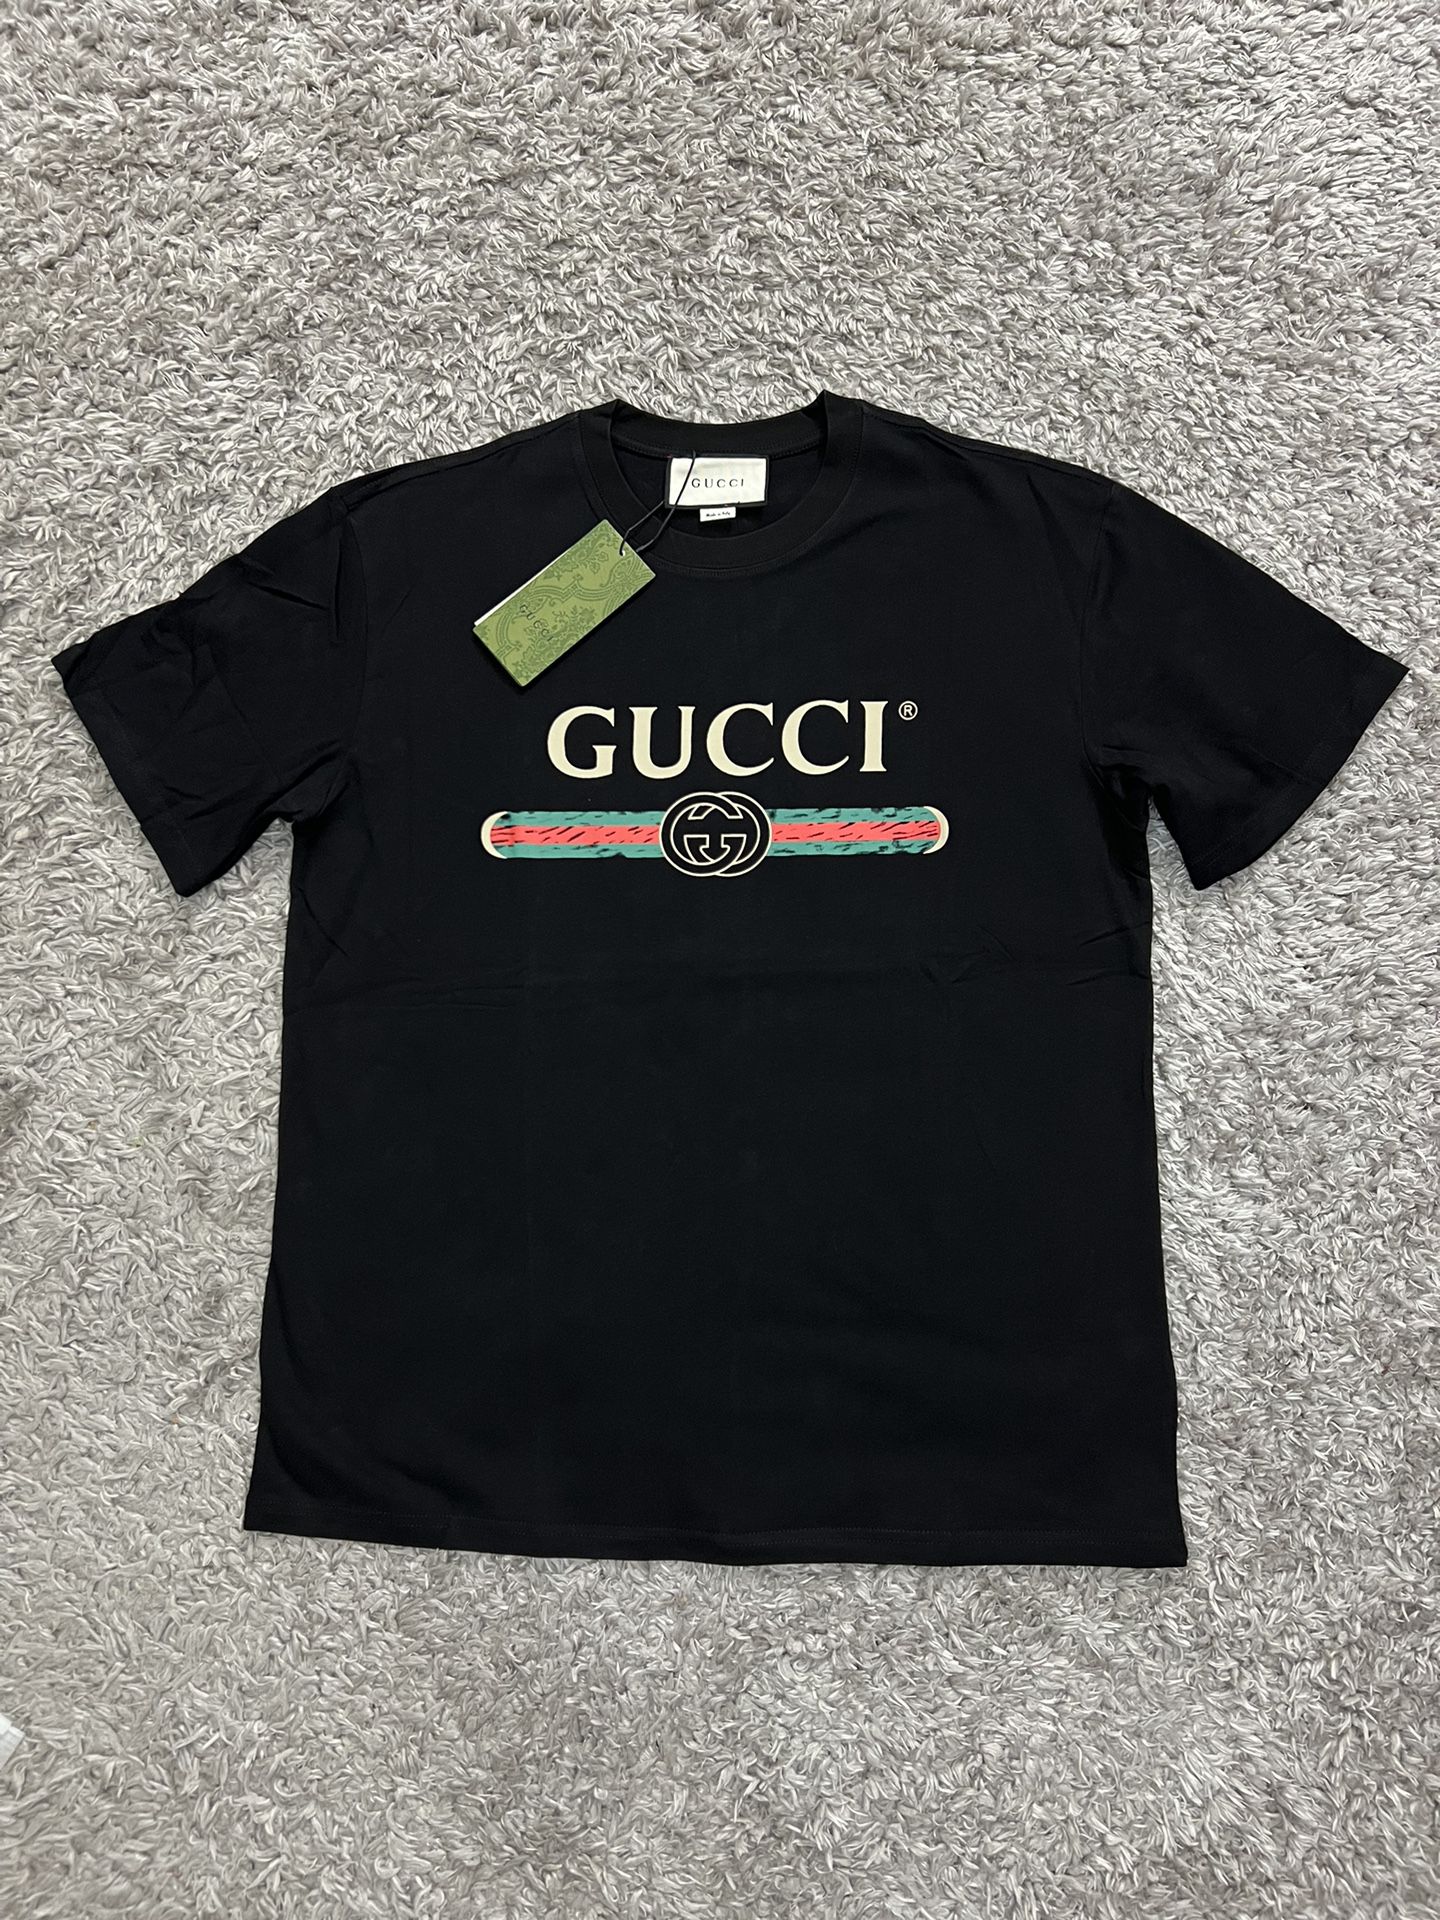 gucci tshirt size large